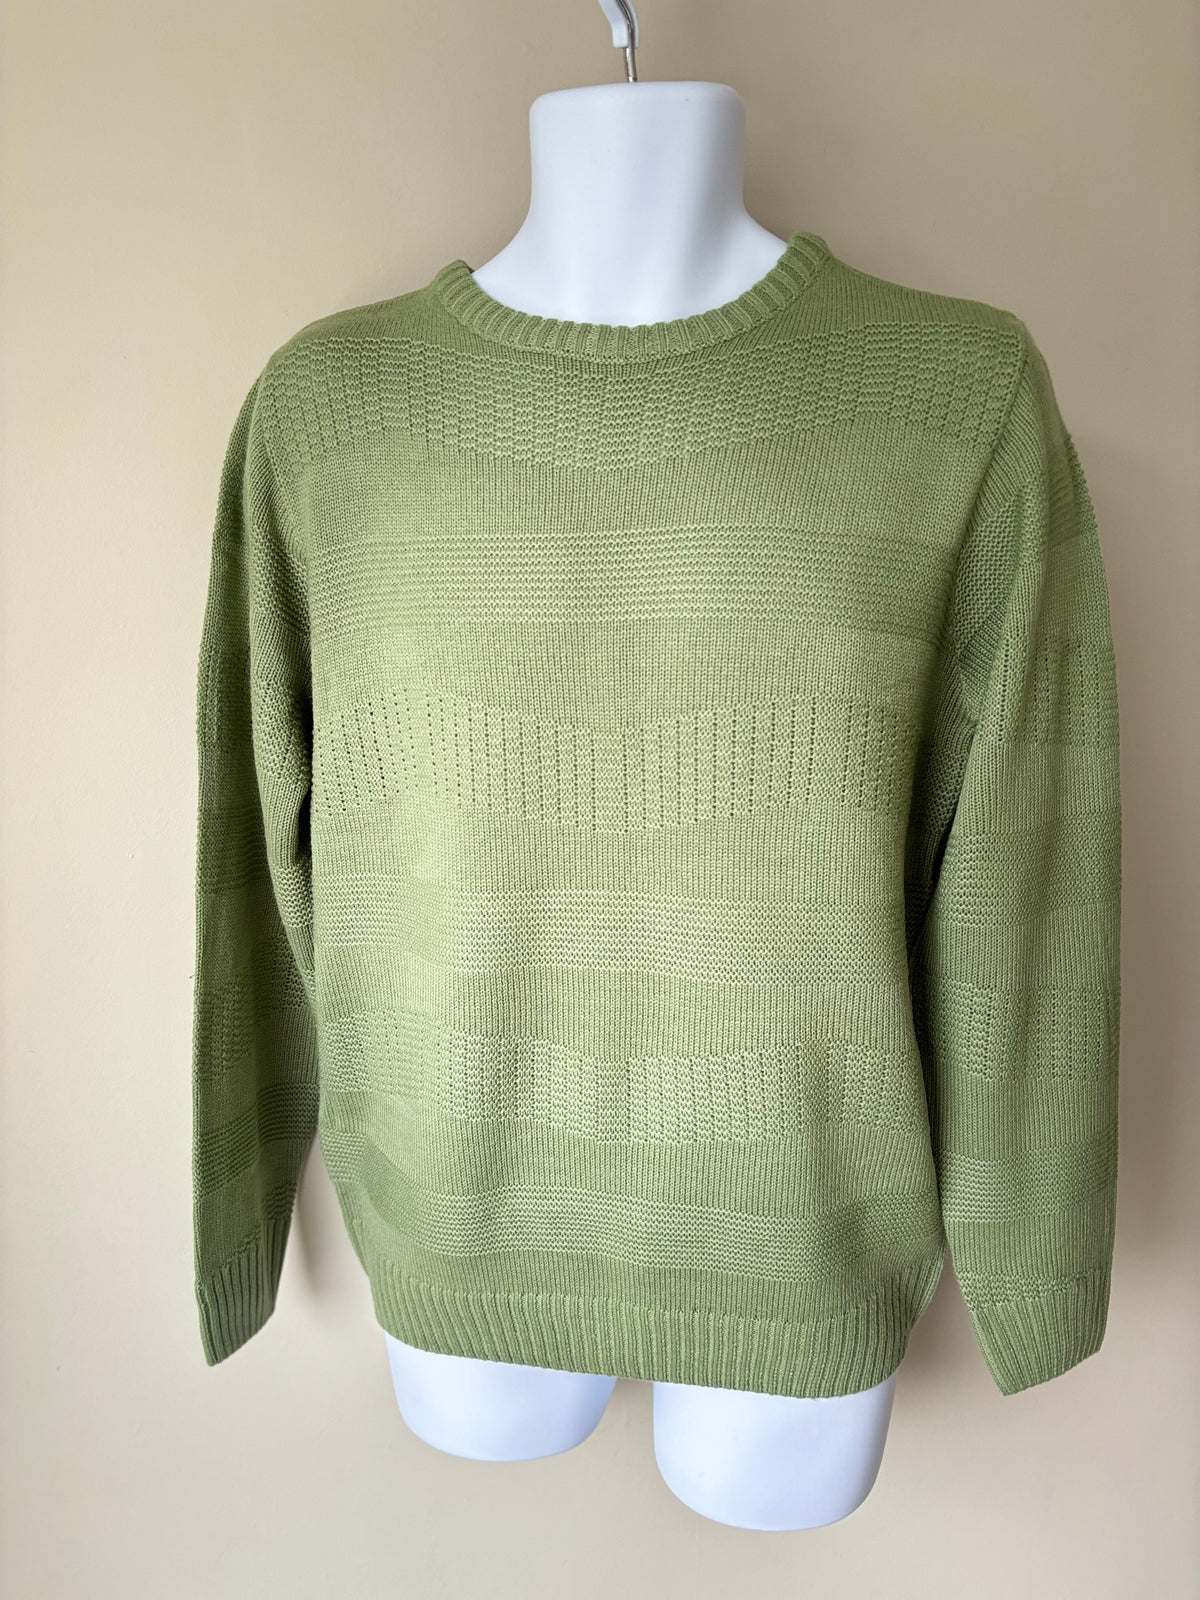 Wave knit jumper in green by Le- Breve Size M Men’s